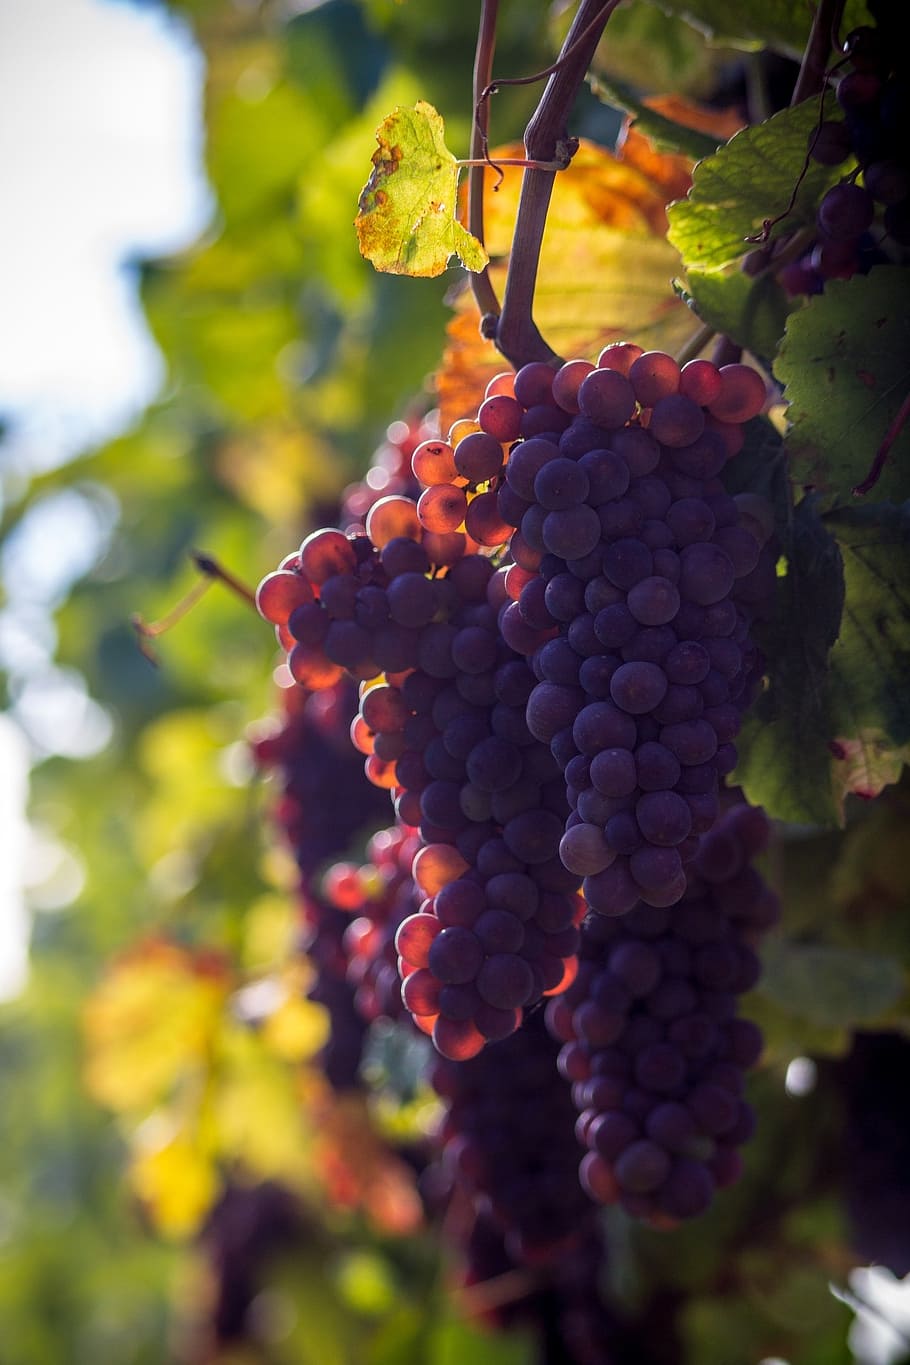 grapes on tree, grape, grapes, wine berries, berries, grapevine, vine, leaves, autumn, ripe